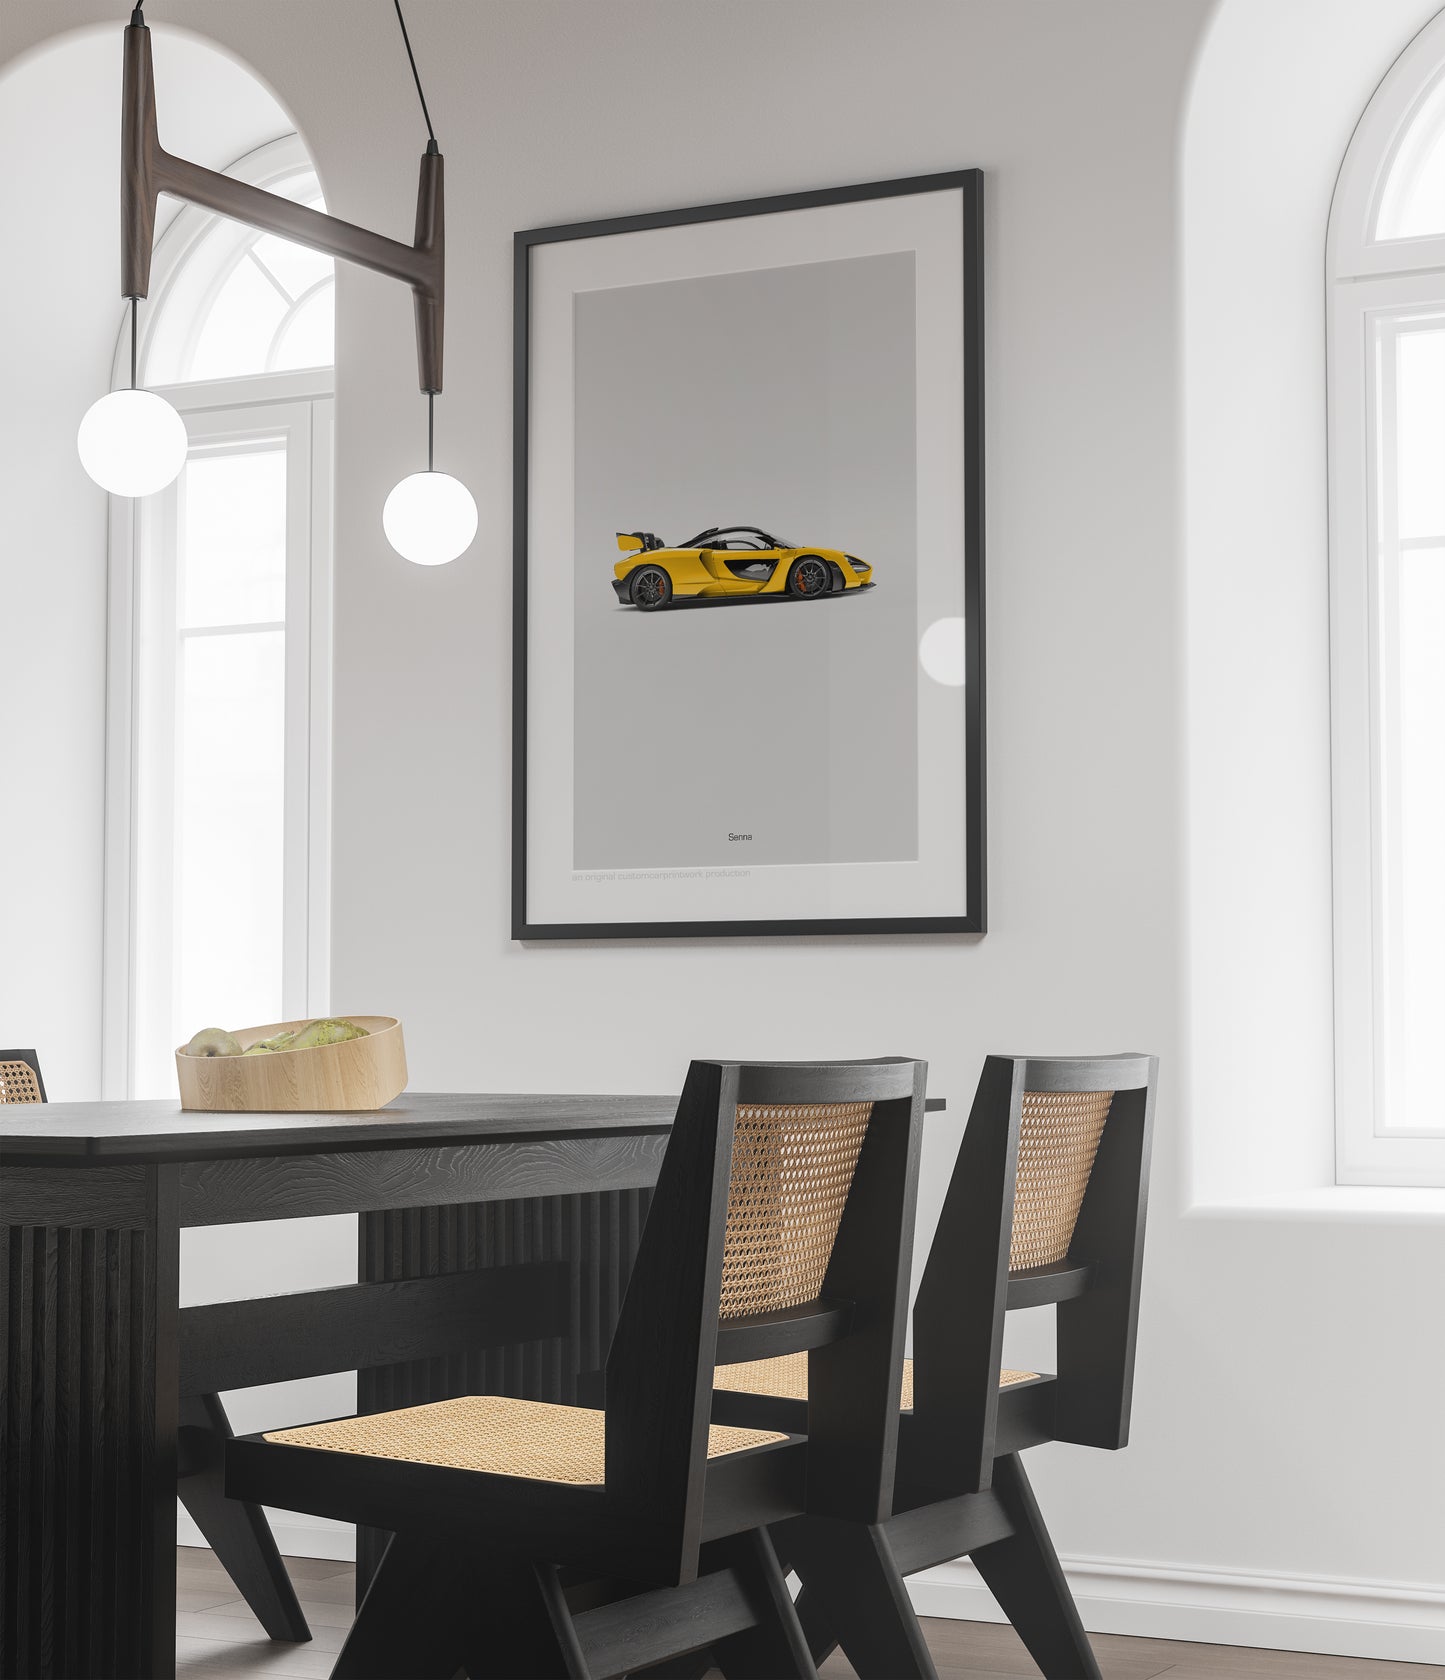 McLaren Senna Poster - Wall Art - Supercars